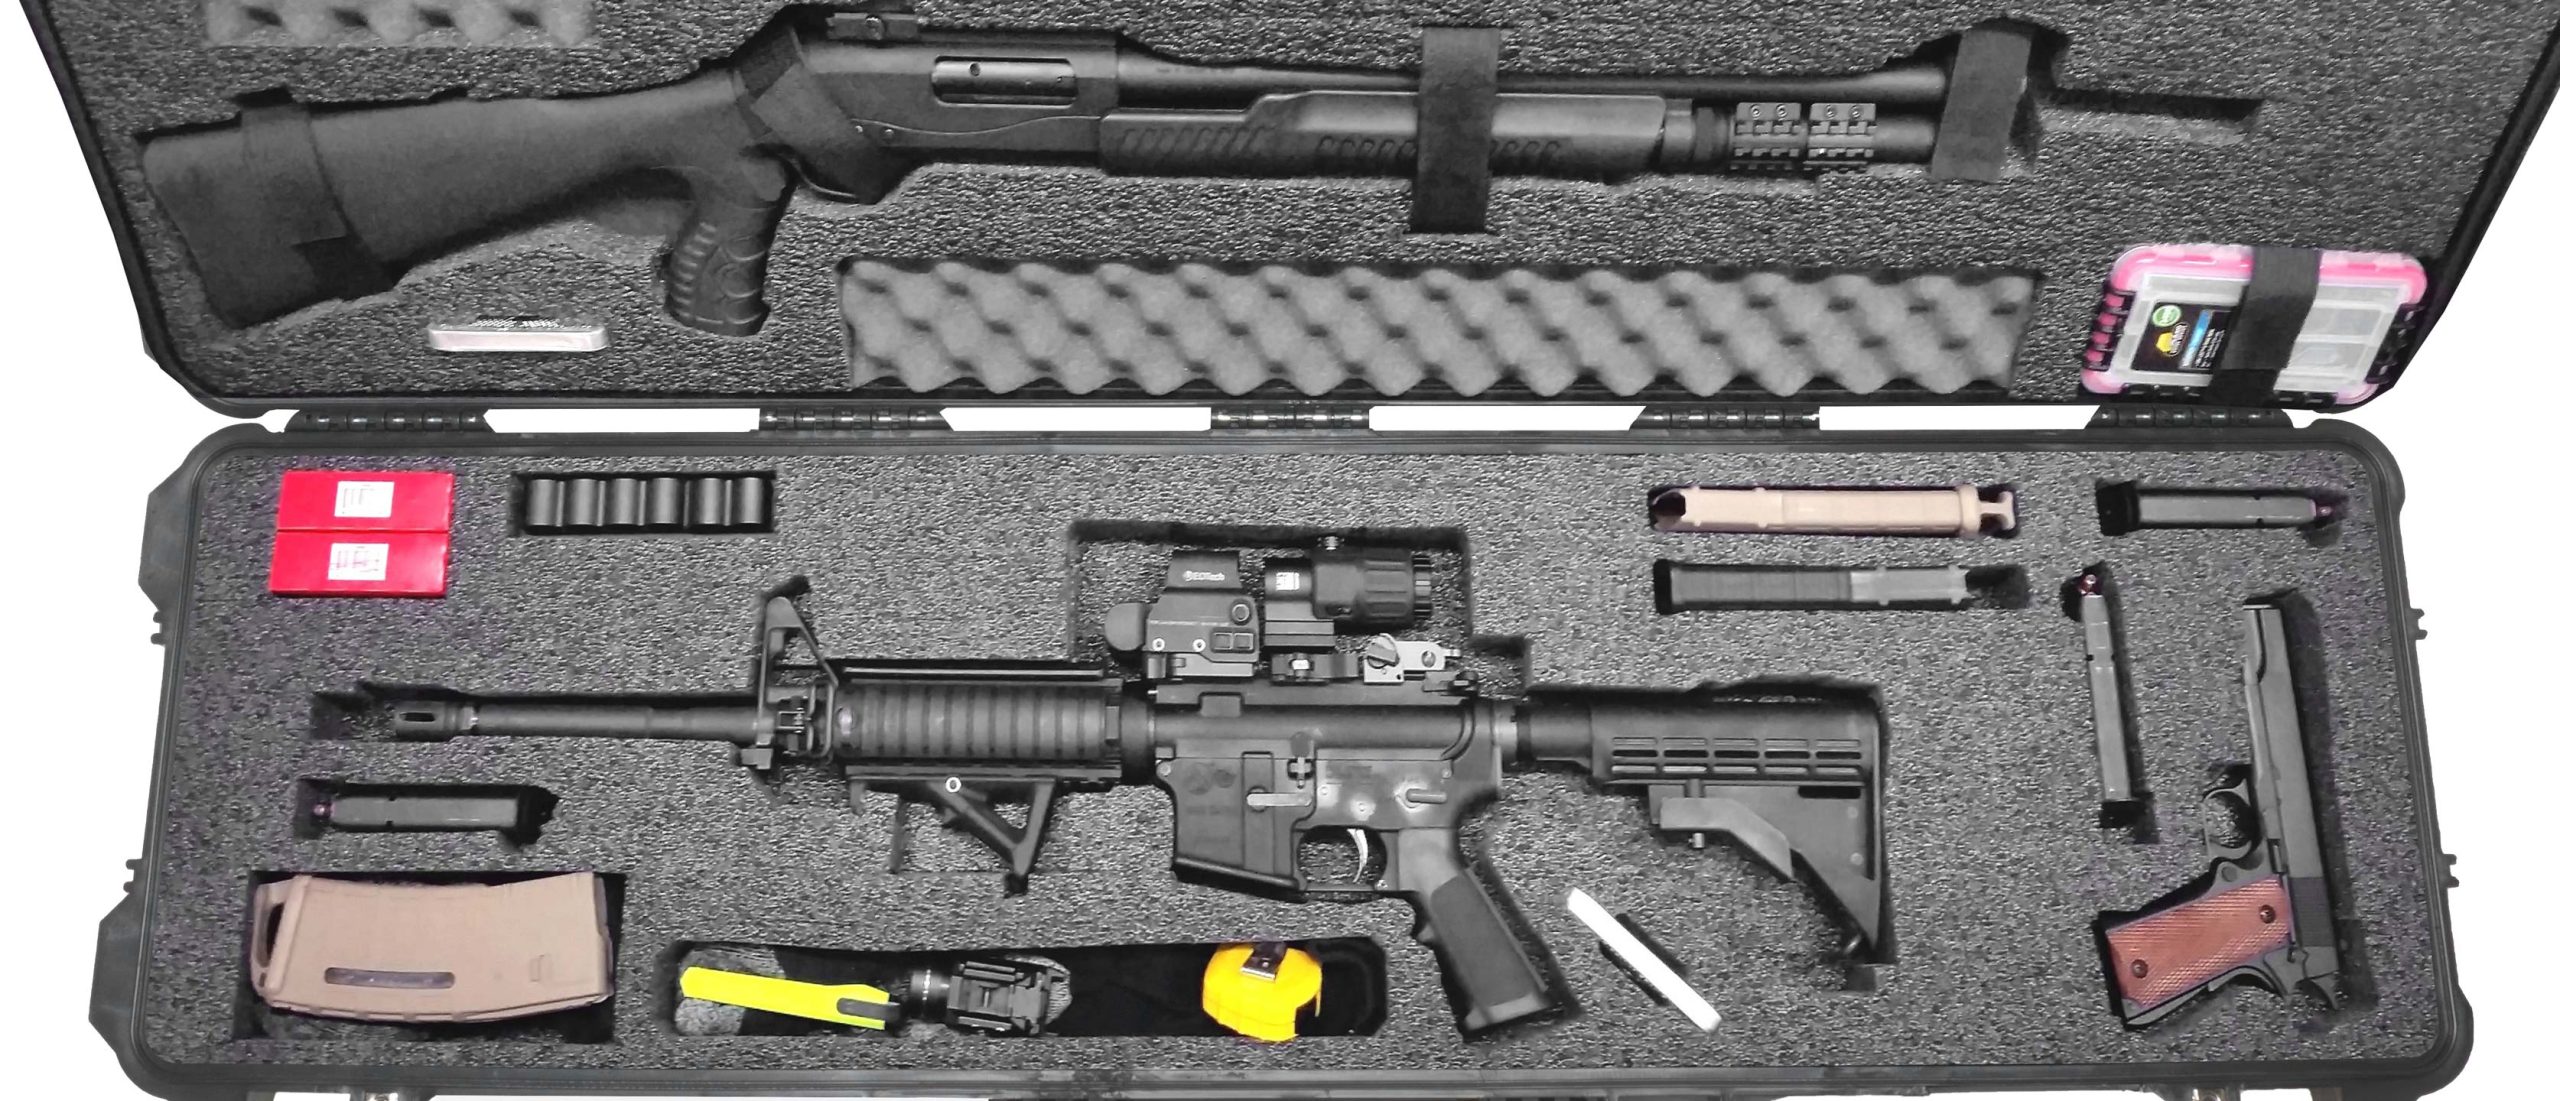  Professional 3 inch Gun Case Foam 12 x 12 x 3 inch - 1  piece (charcoal)